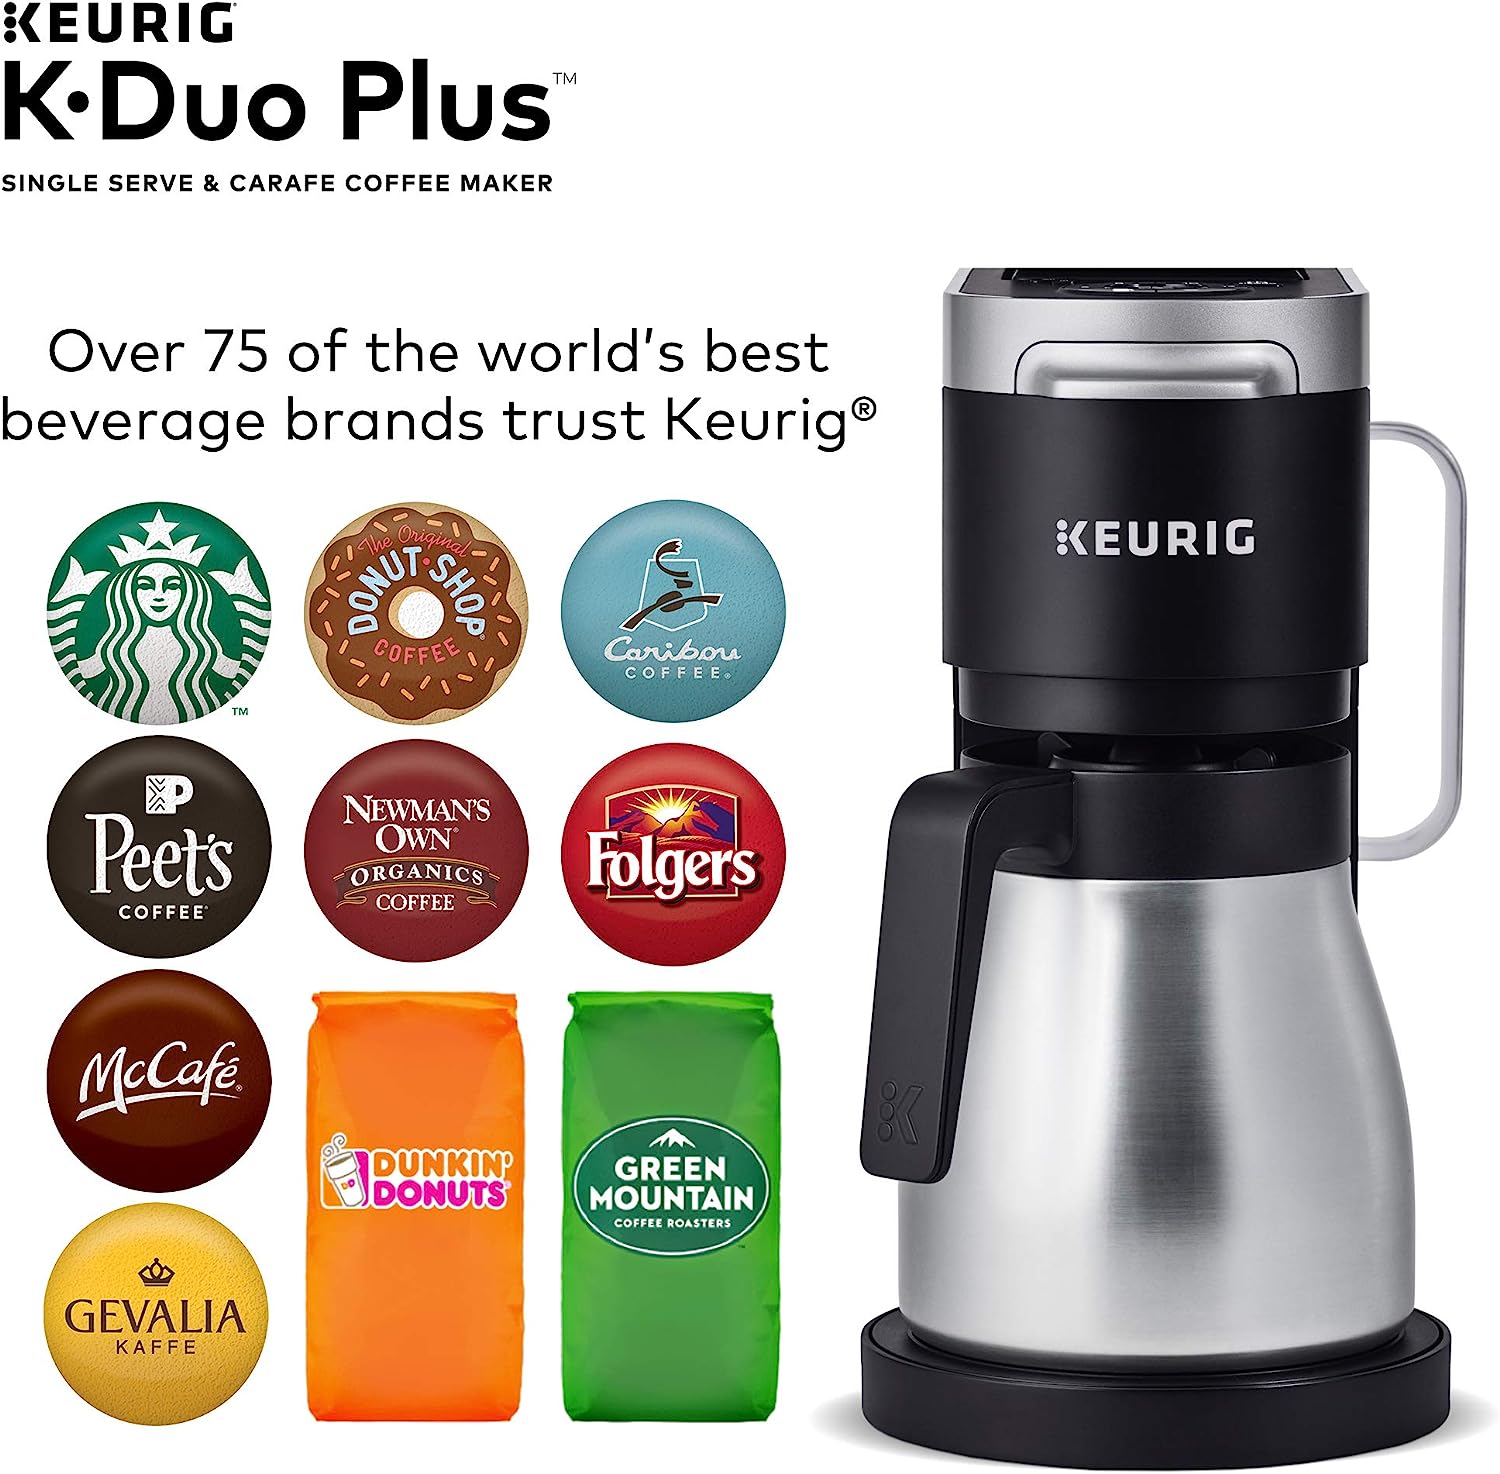 Keurig K-Duo Plus single serve and carafe coffee maker